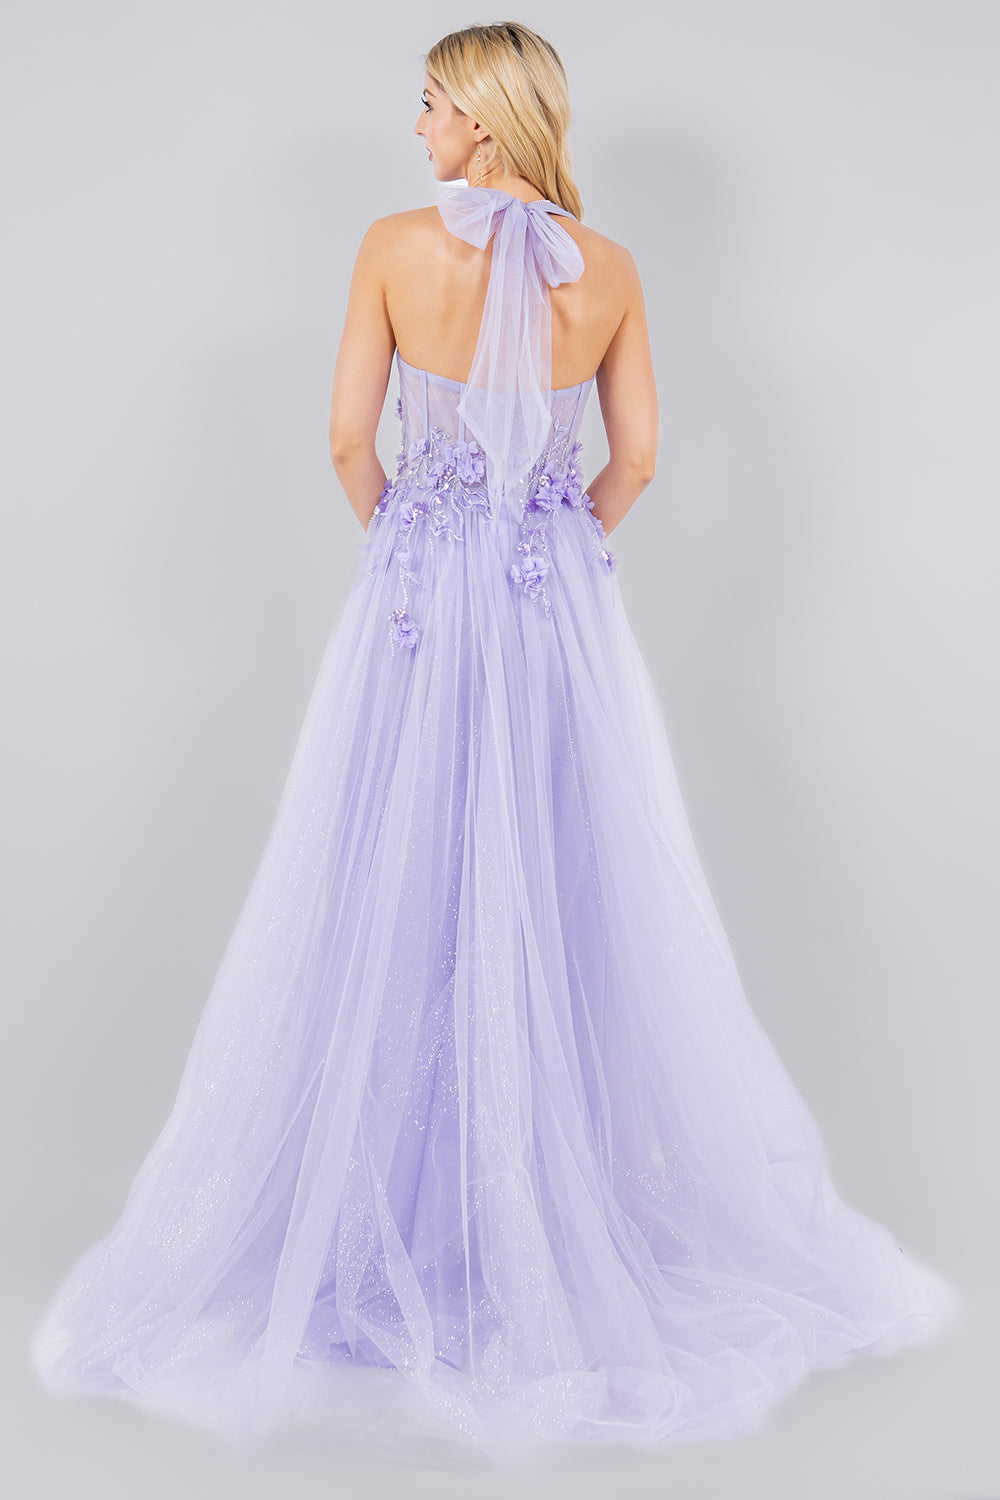 3D Floral Halter A-line Slit Gown by Cinderella Couture 8076J